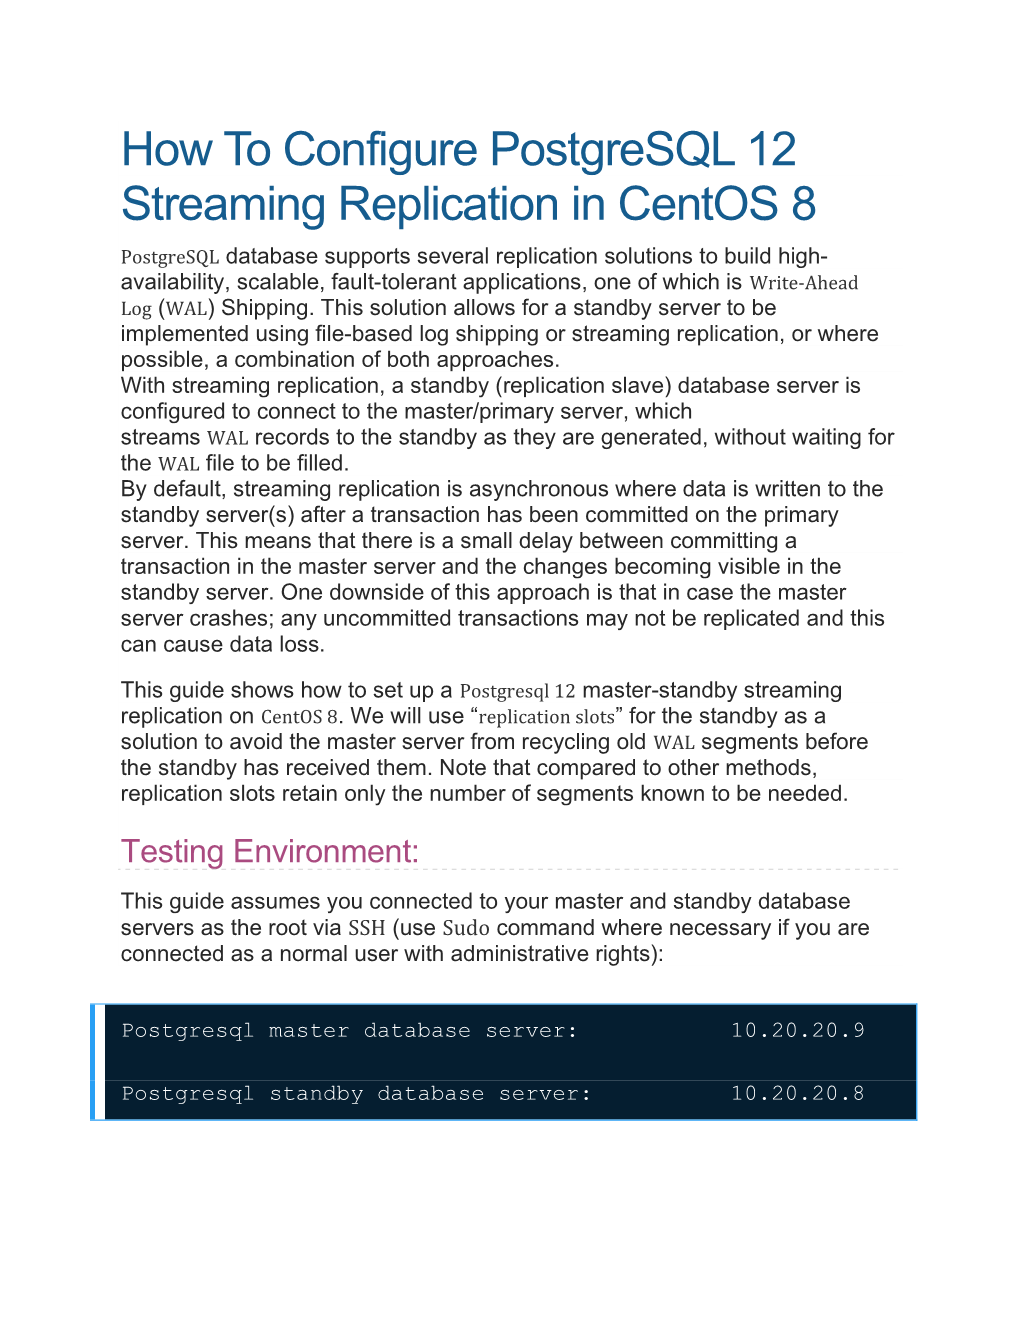 How to Configure Postgresql 12 Streaming Replication in Centos 8